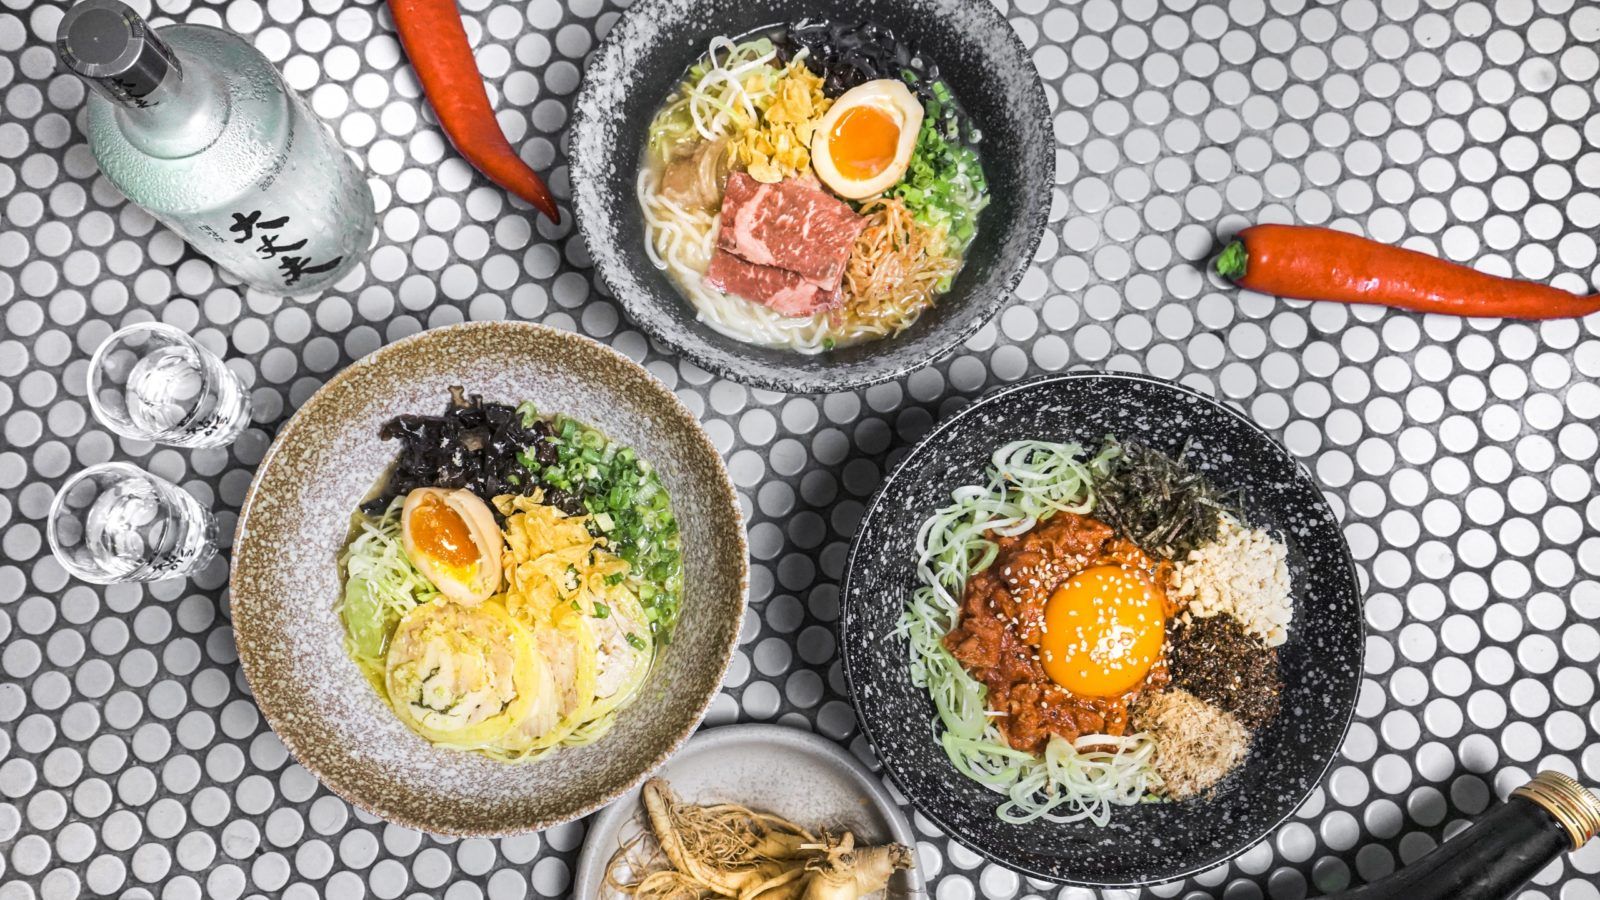 Send Noods: The best noodles in Hong Kong